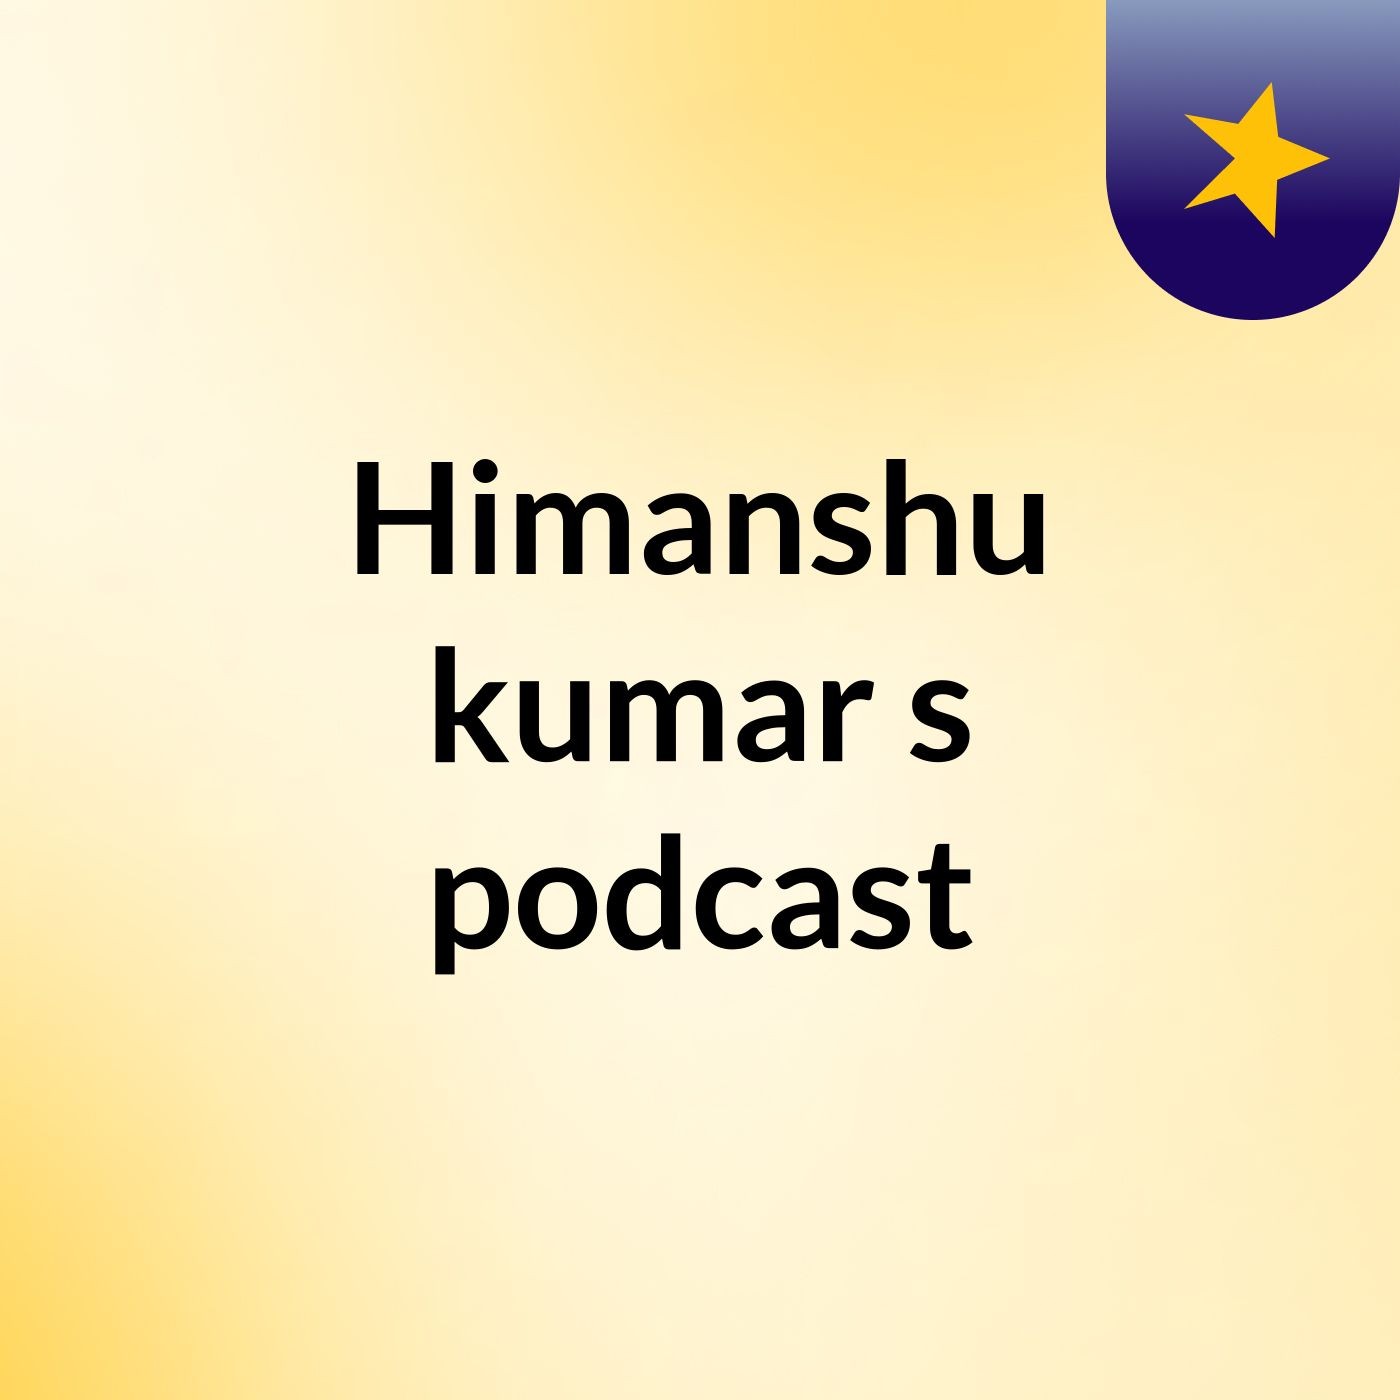 Himanshu kumar's podcast